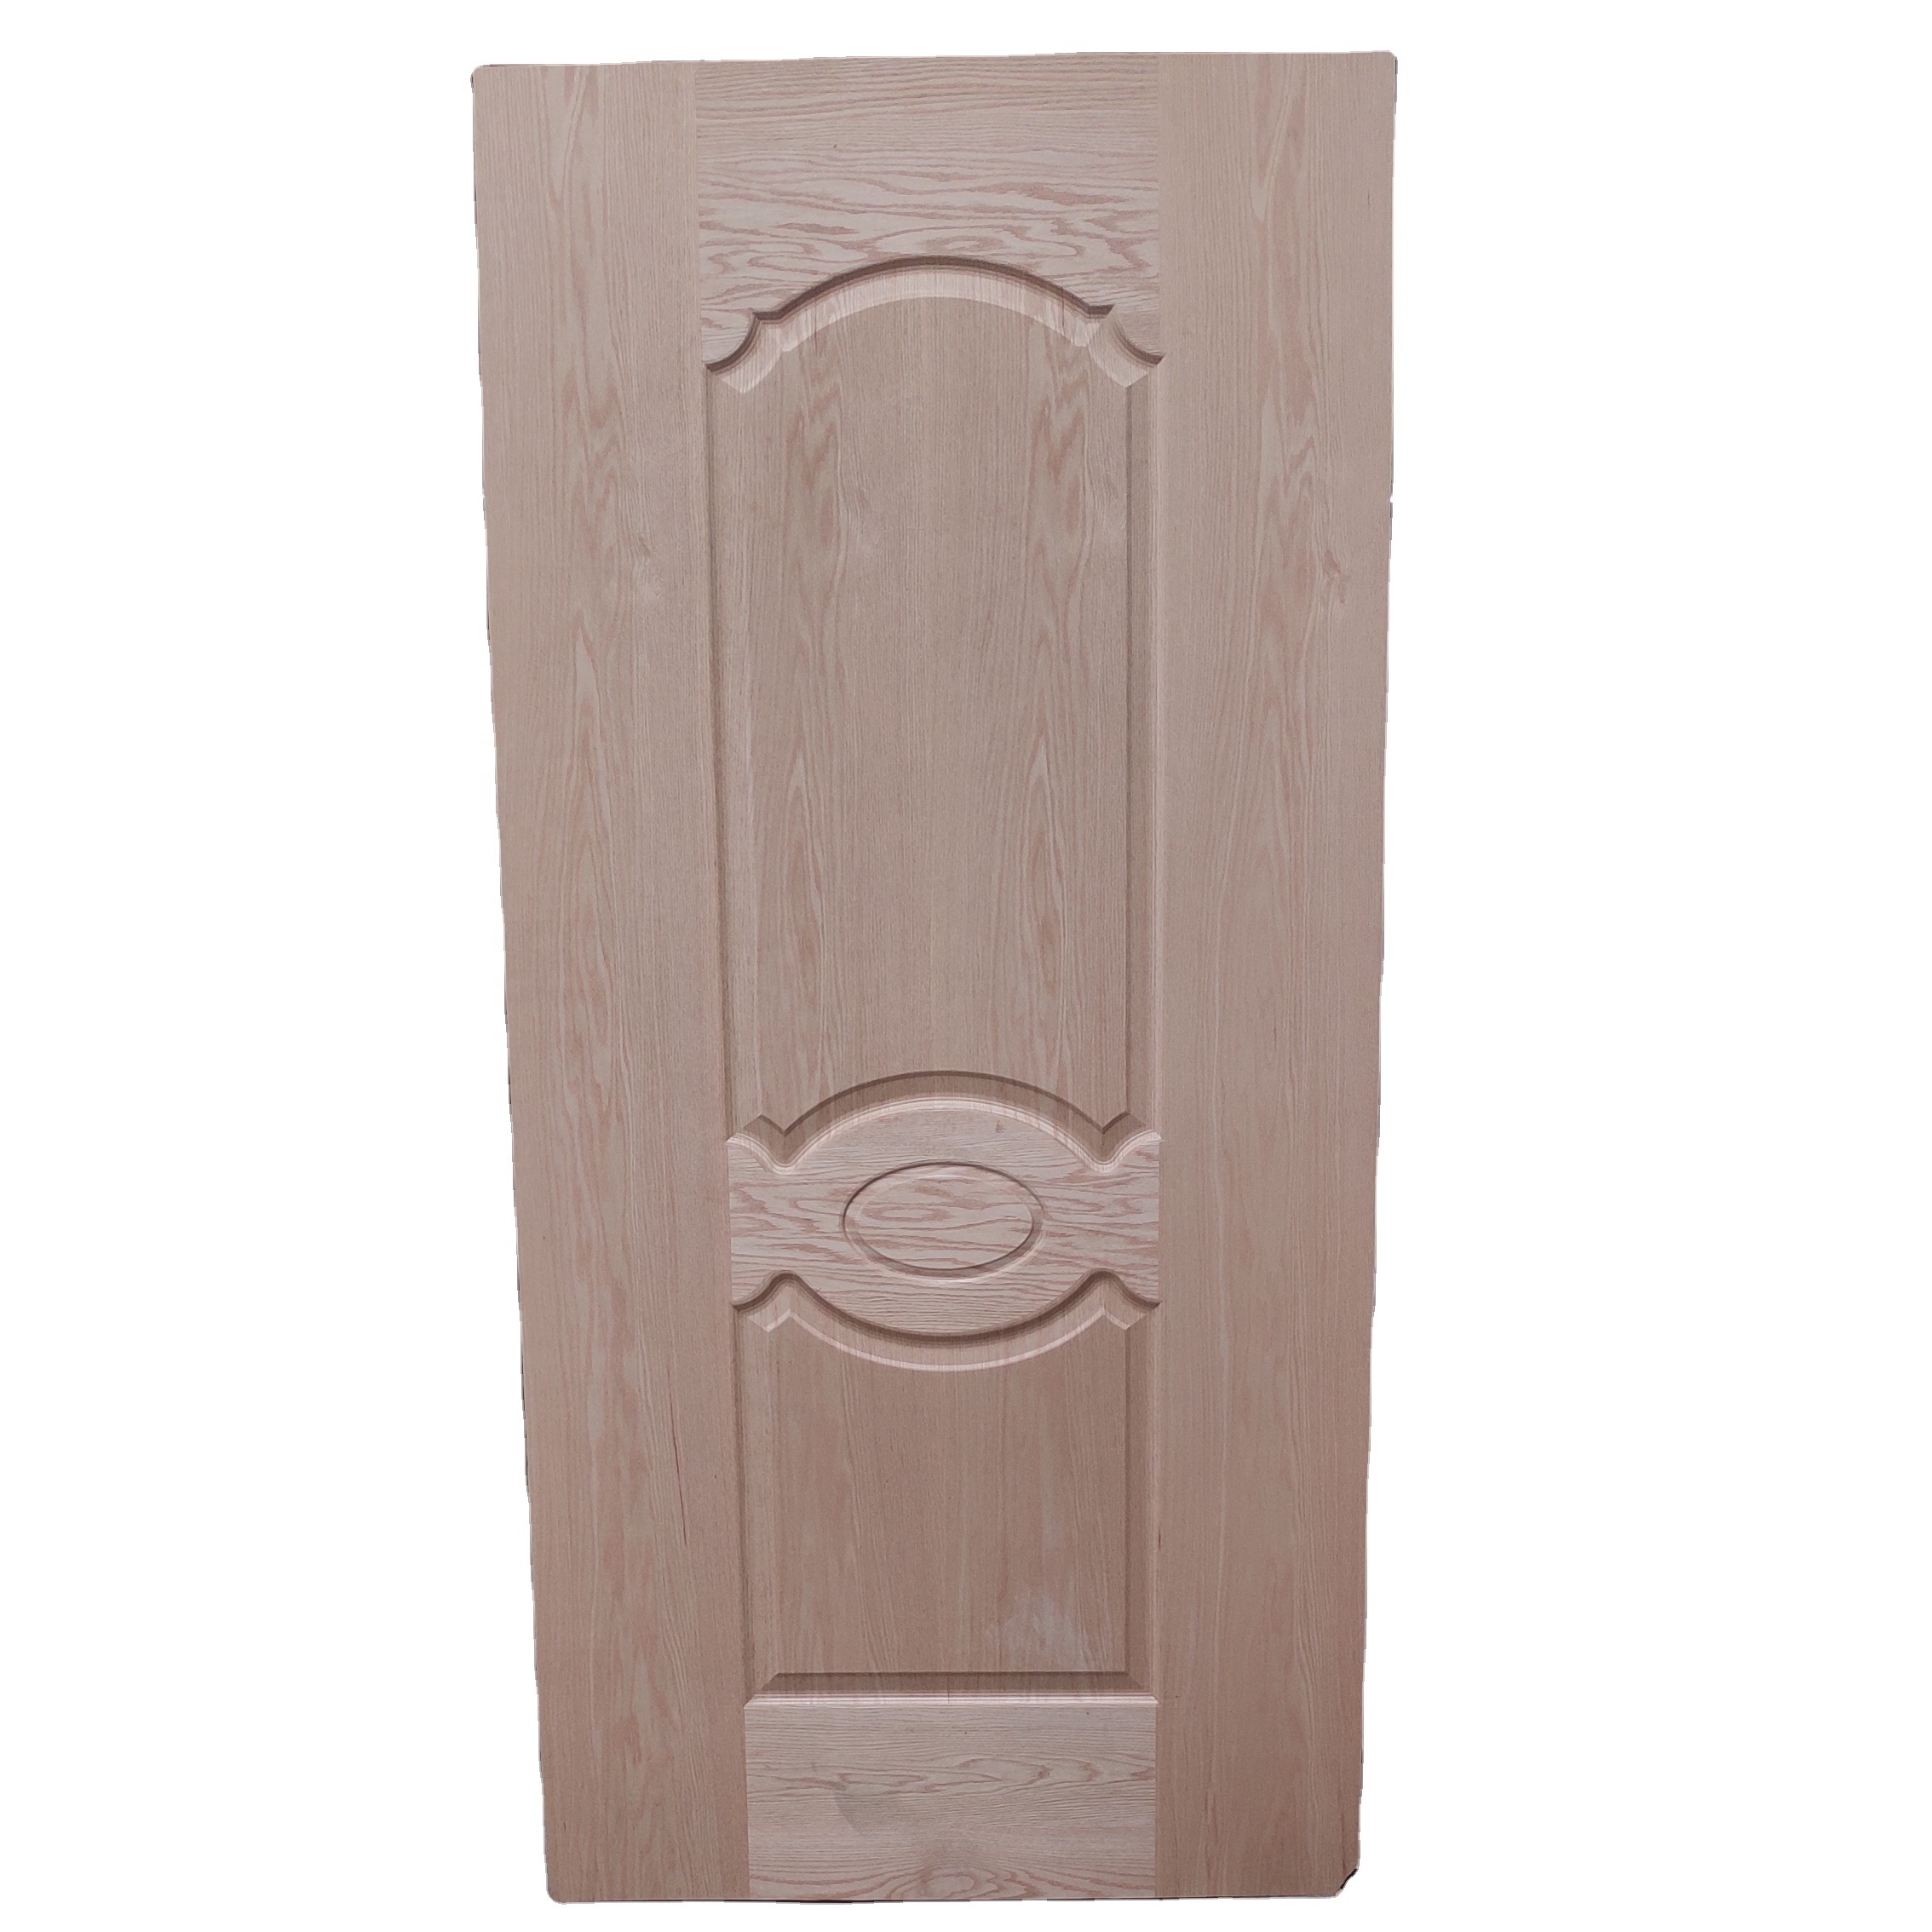 Factory For Moulded Door Skin - 3mm natural red oak / teak / ash / sapele / walnut hdf veneer mould door skin – Chenming